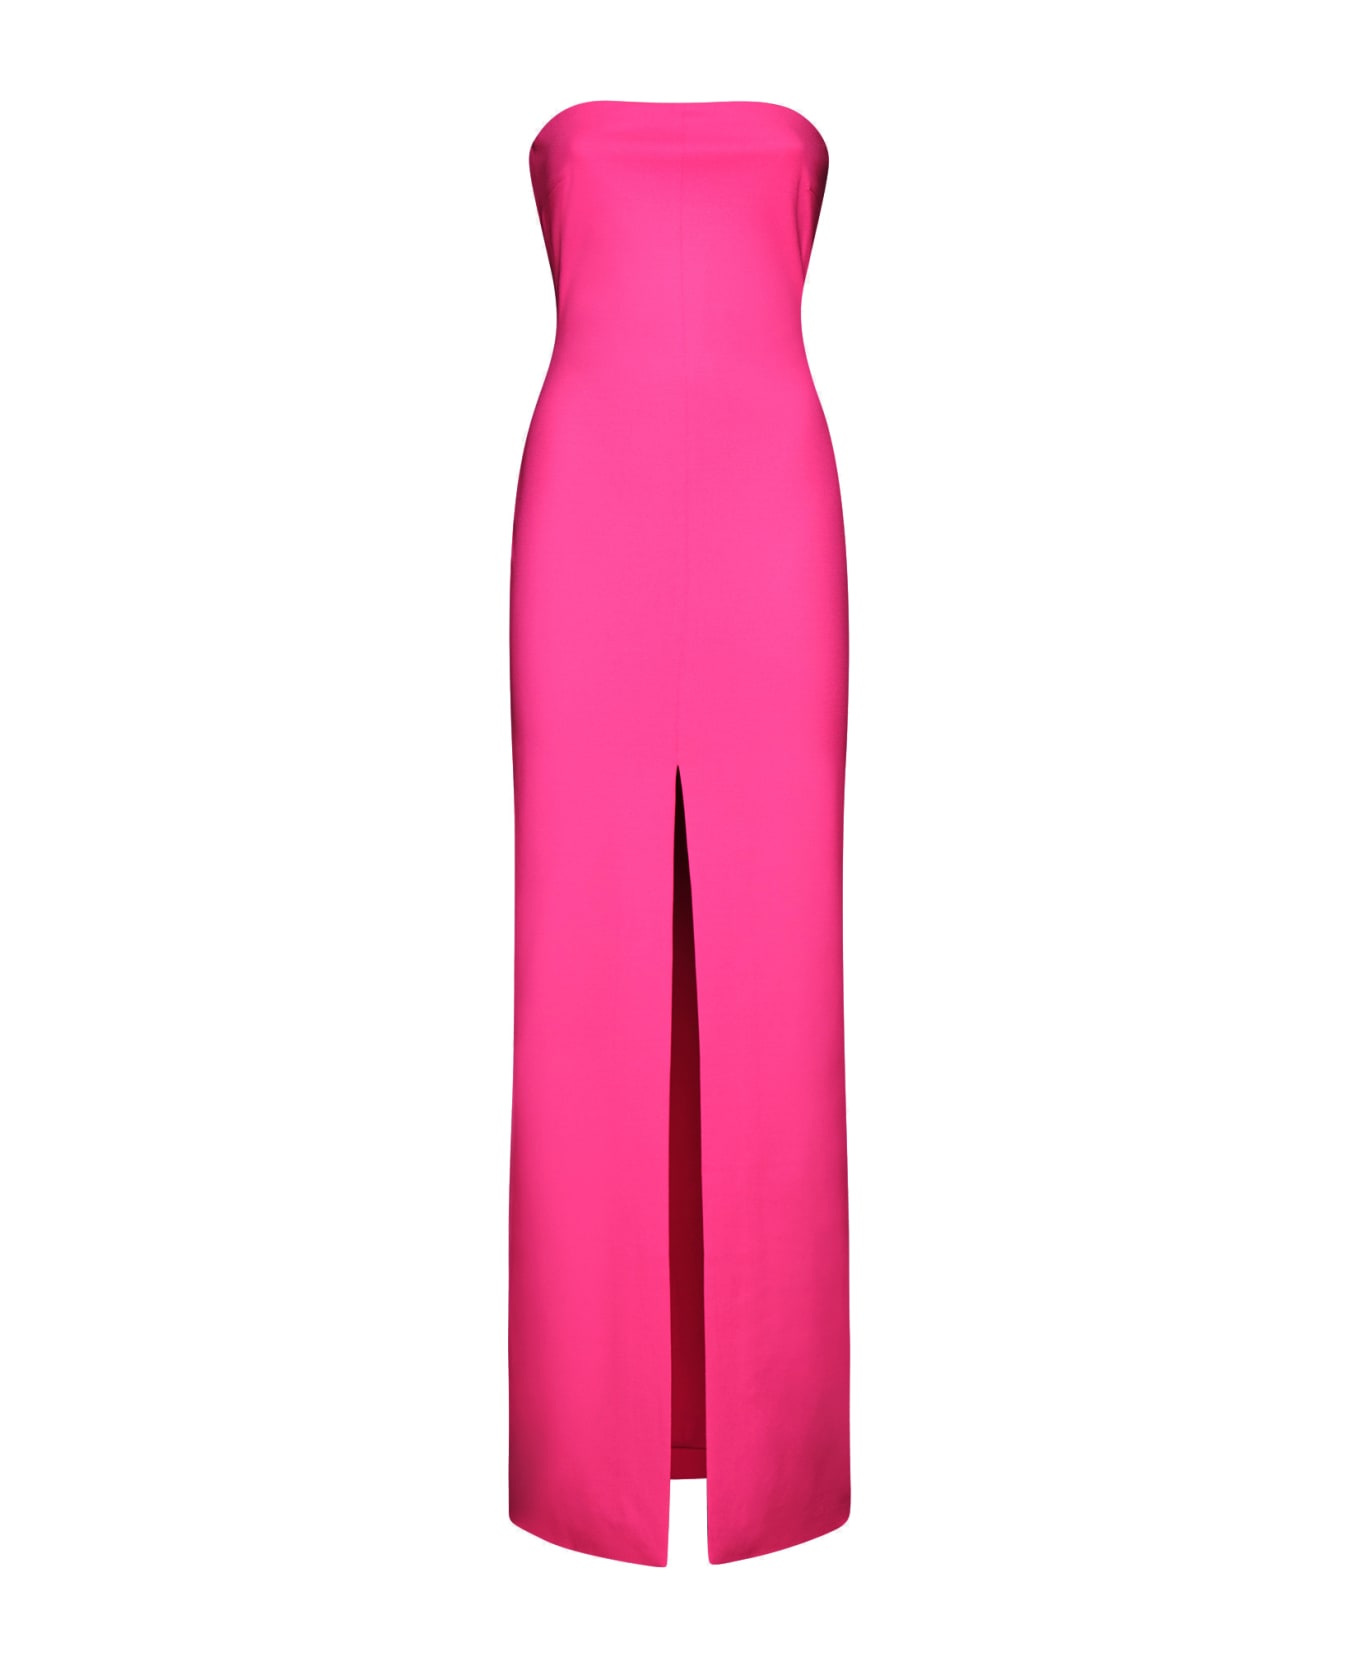 Solace London Dress - Hot pink ジャンプスーツ